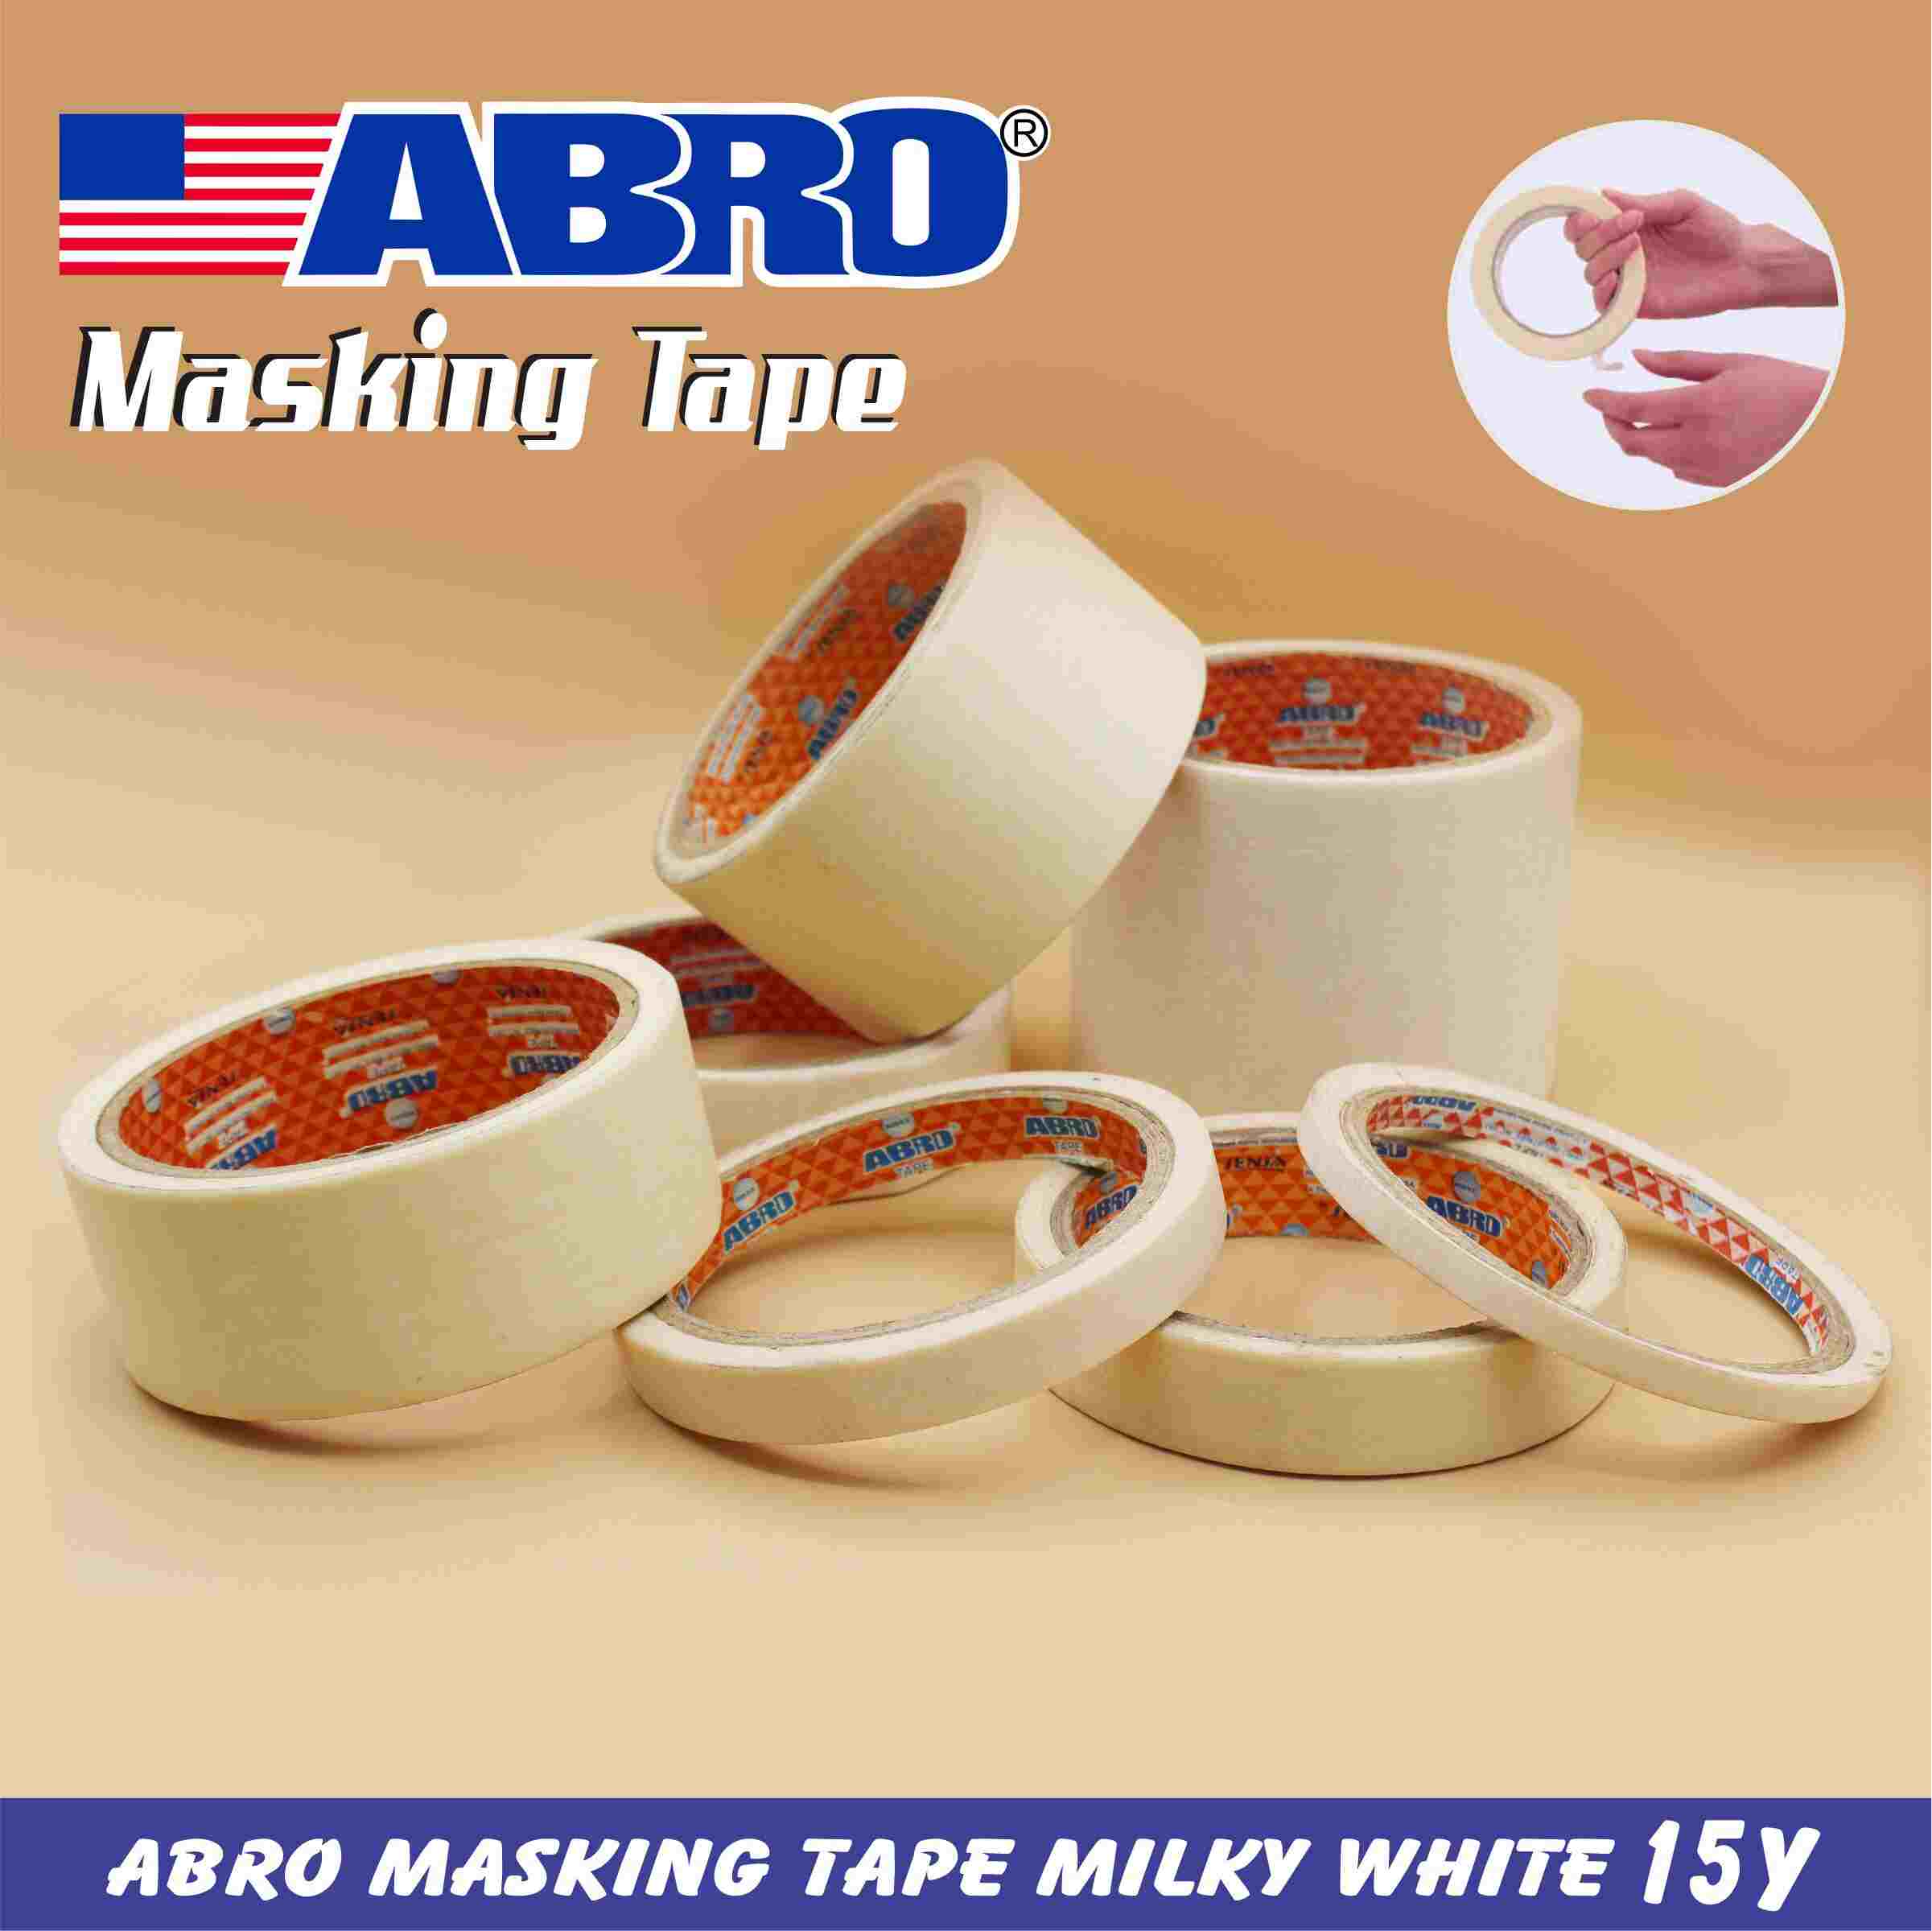 Masking Tape 3 Inch Price In Pakistan . Homeshopping